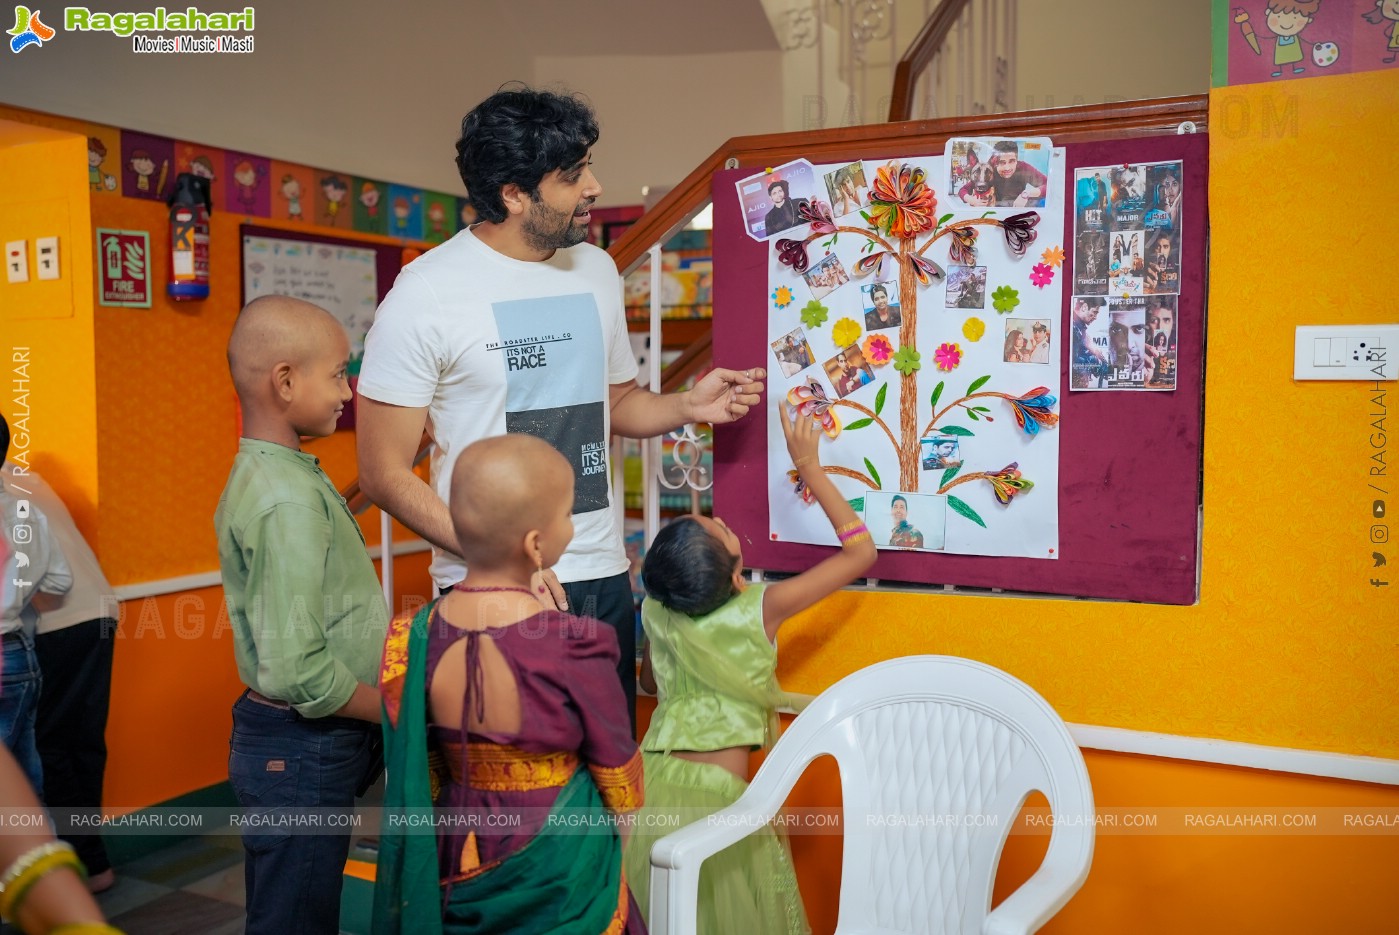 Adivi Sesh spent time with Cancer battling children at St Jude Child Care